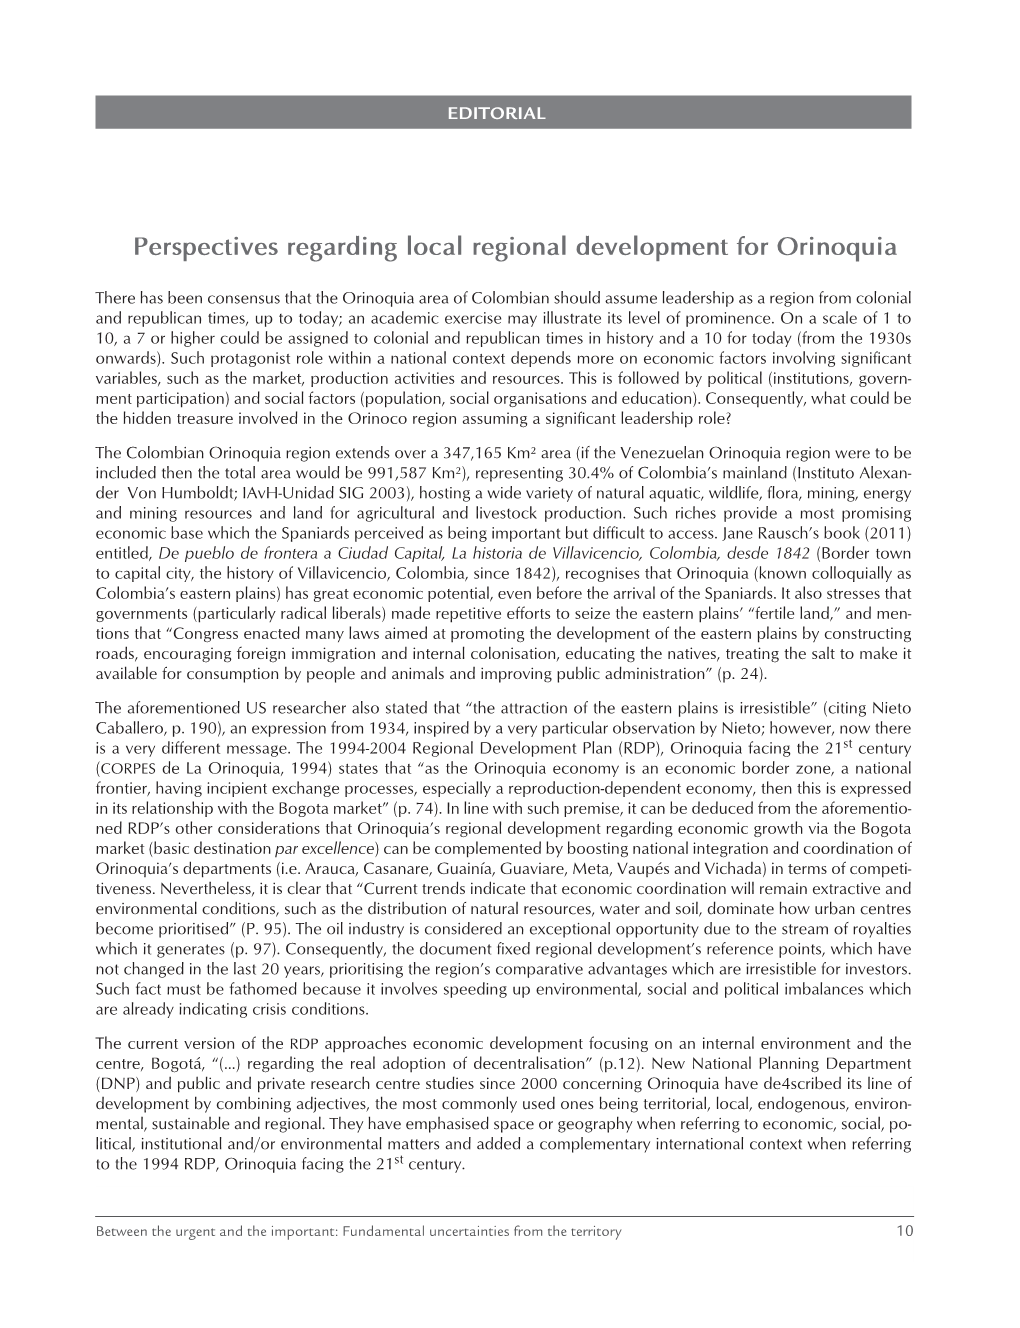 Perspectives Regarding Local Regional Development for Orinoquia